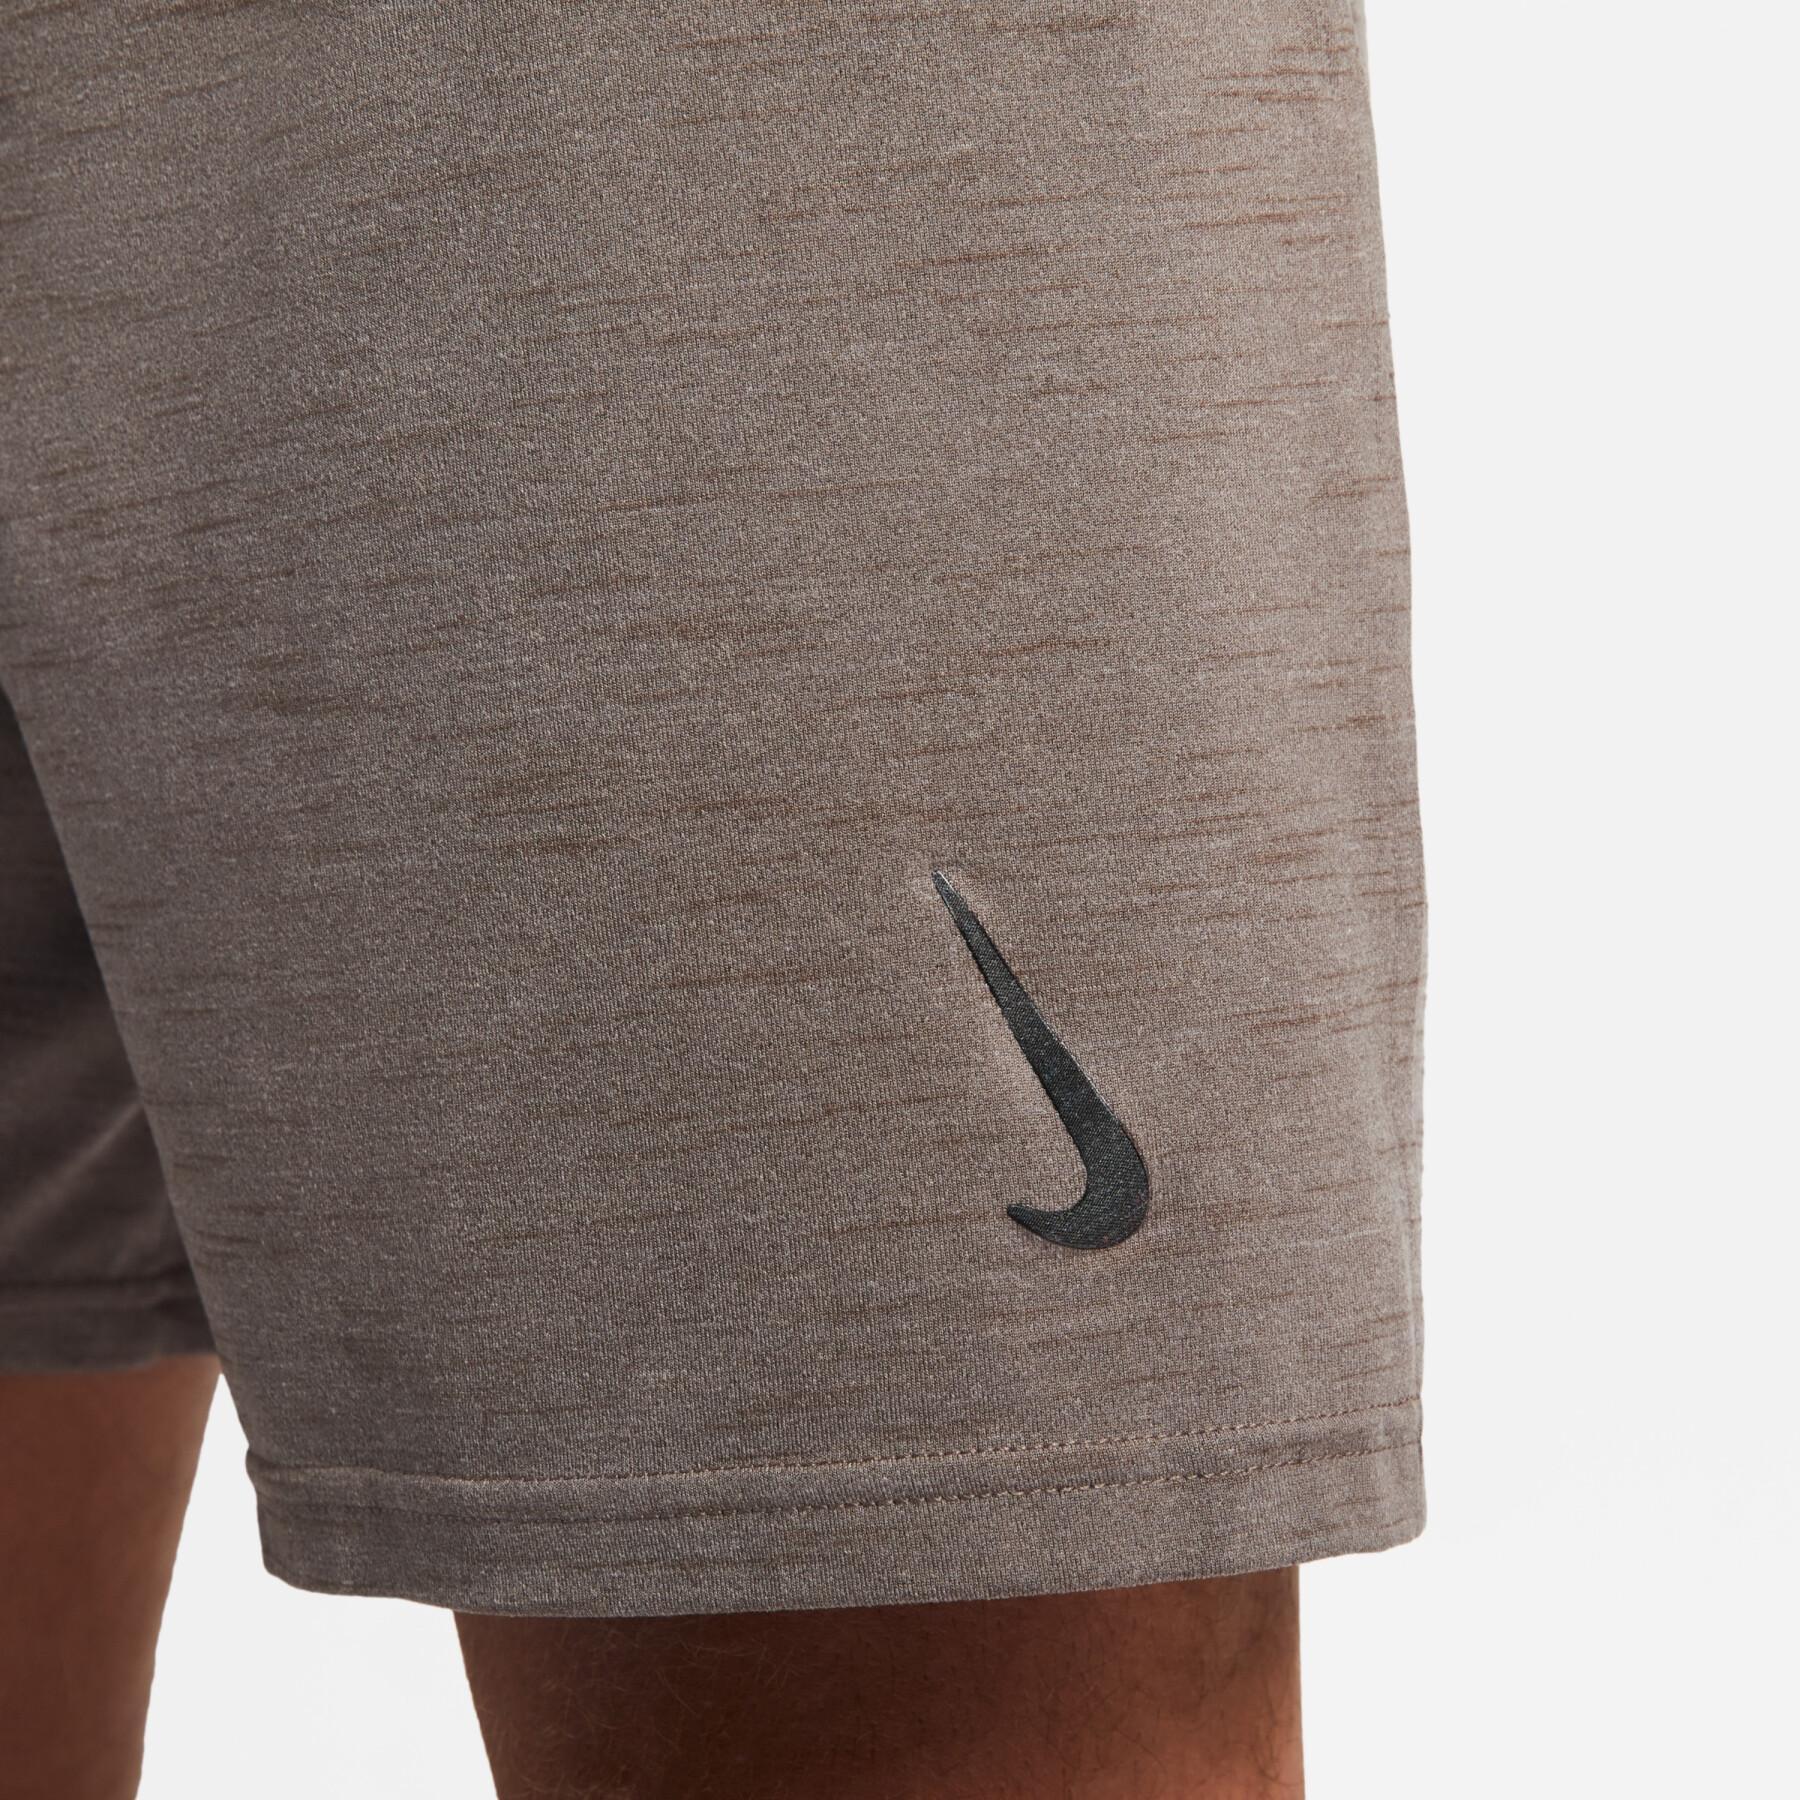 Short Nike Yoga Dri-Fit